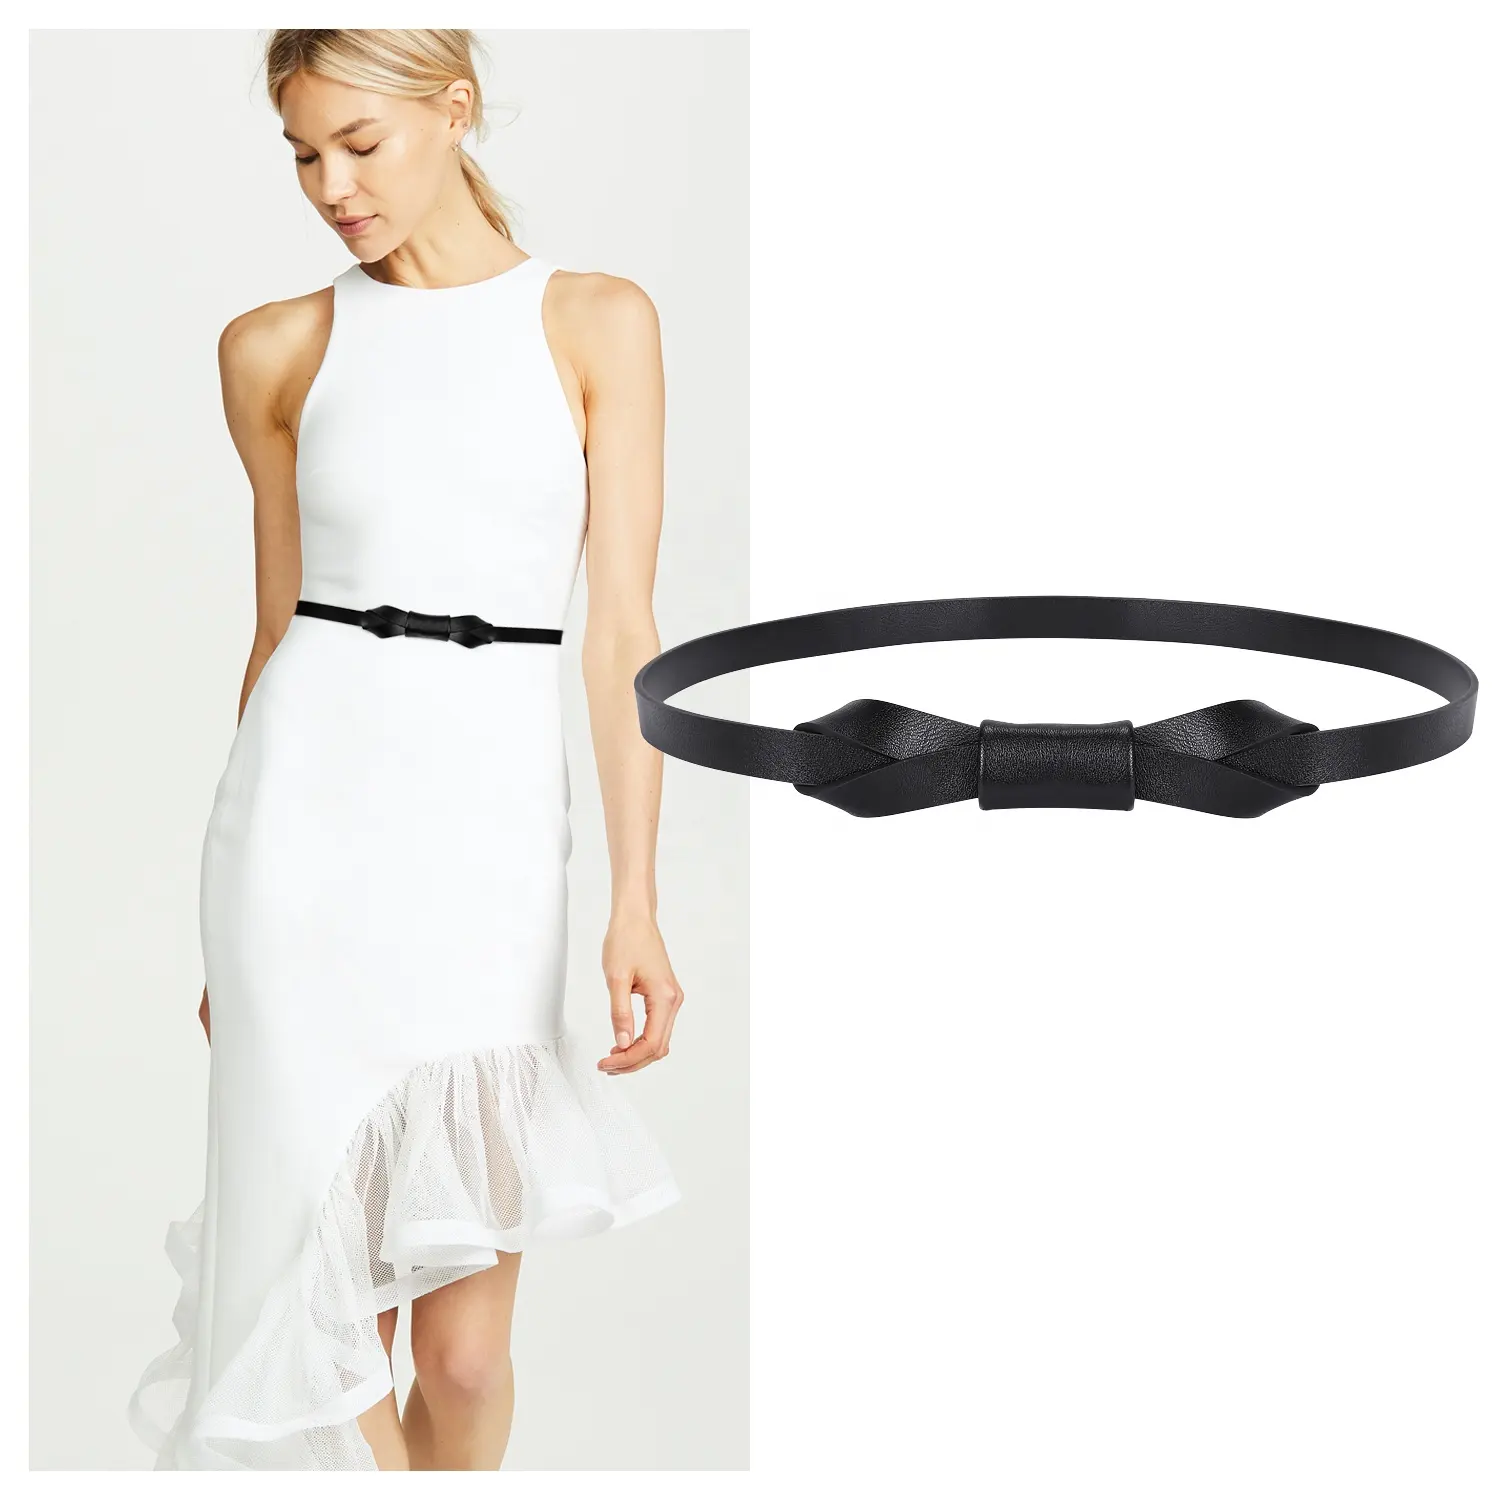 No hole Skinny Women Belt Thin Waist Belt for Dress Designer Fashion Elegant Classic Lady Belt